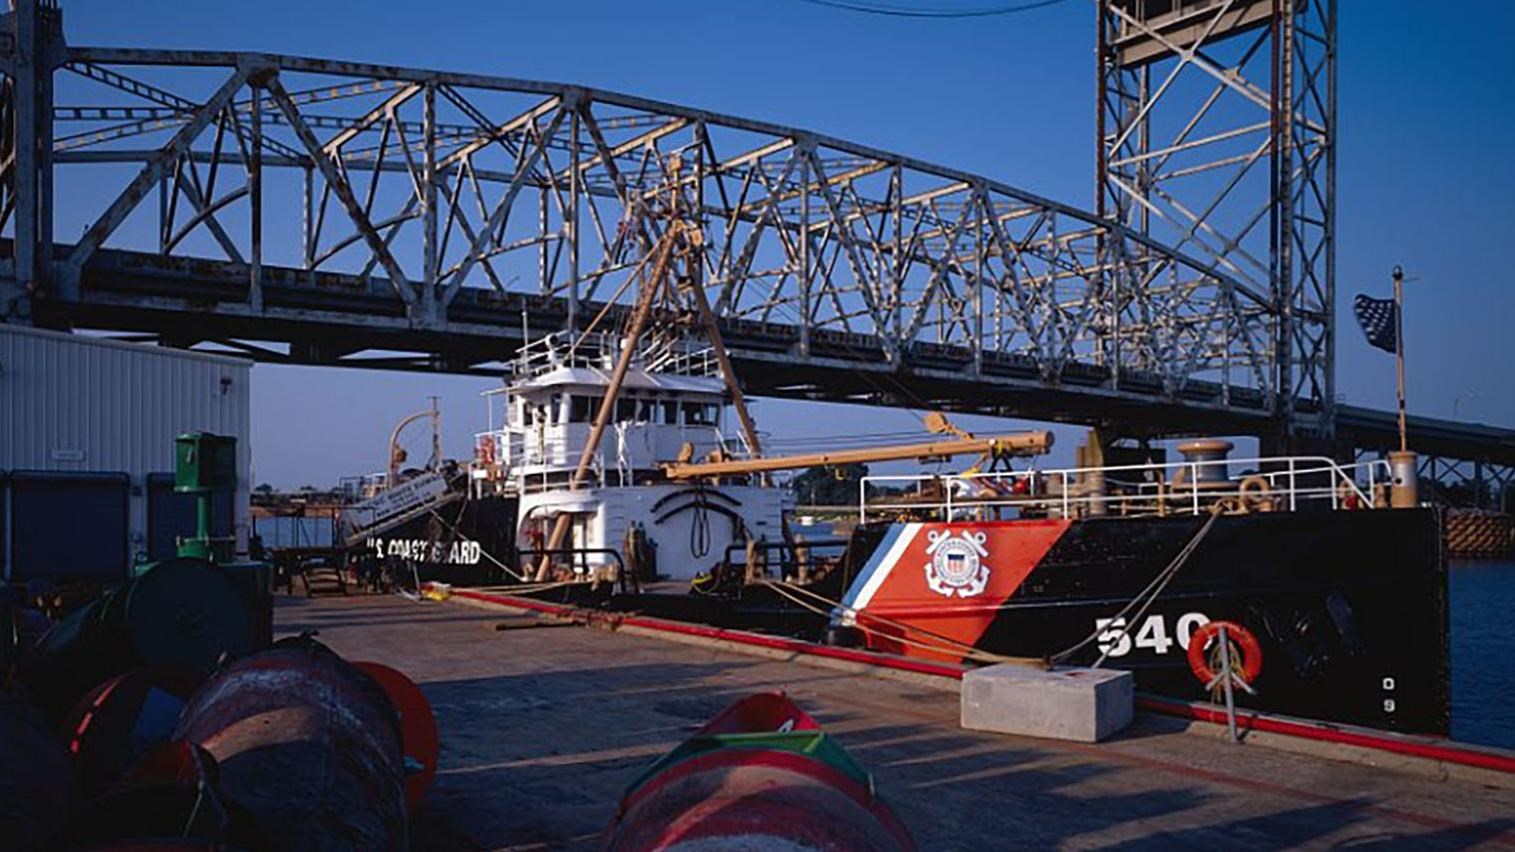 A U.S. Coast Guard Cutter is moored off a concrete pier. A bridge extends above into a blue sky.